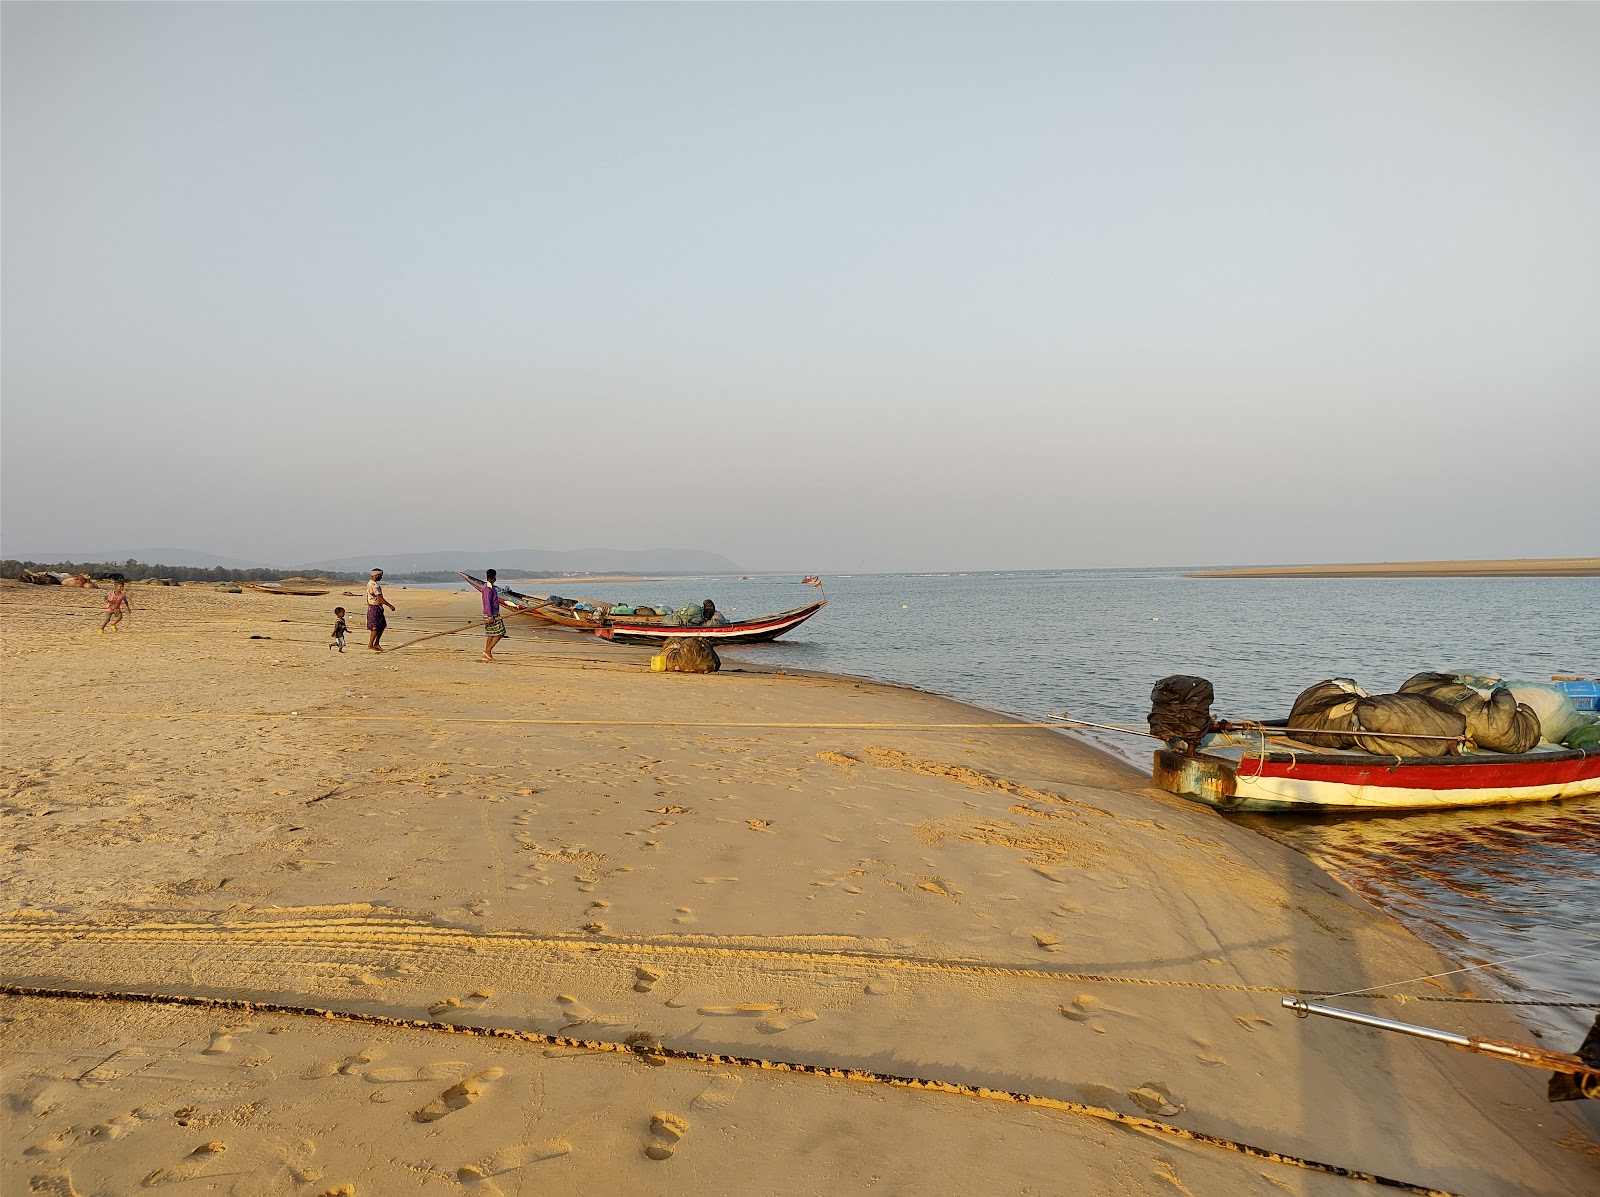 Fotografija Purunabandha Sea Beach nahaja se v naravnem okolju